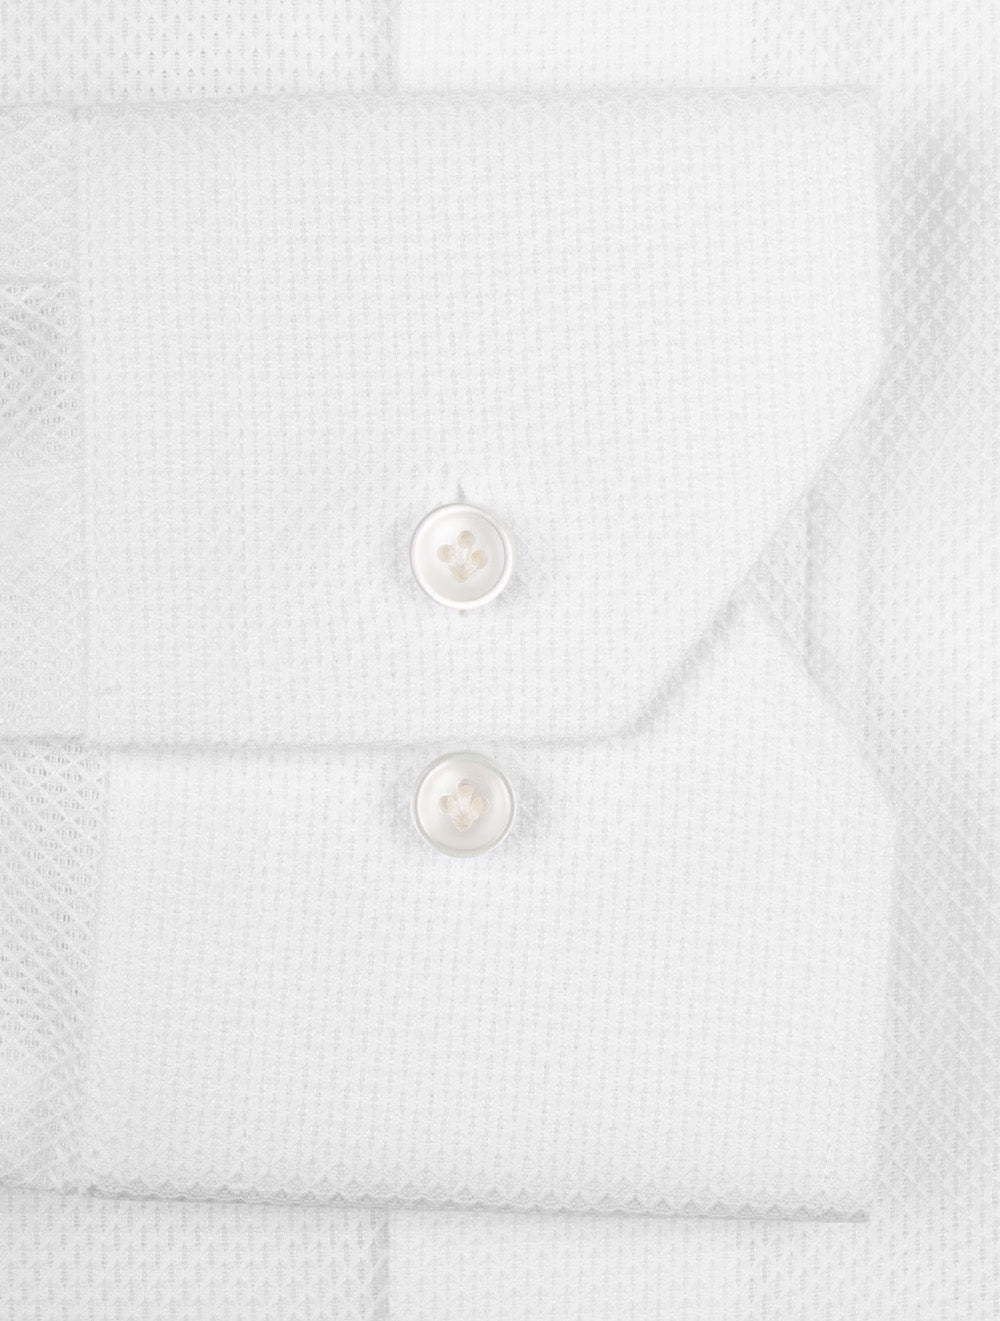 Pique Shirt White